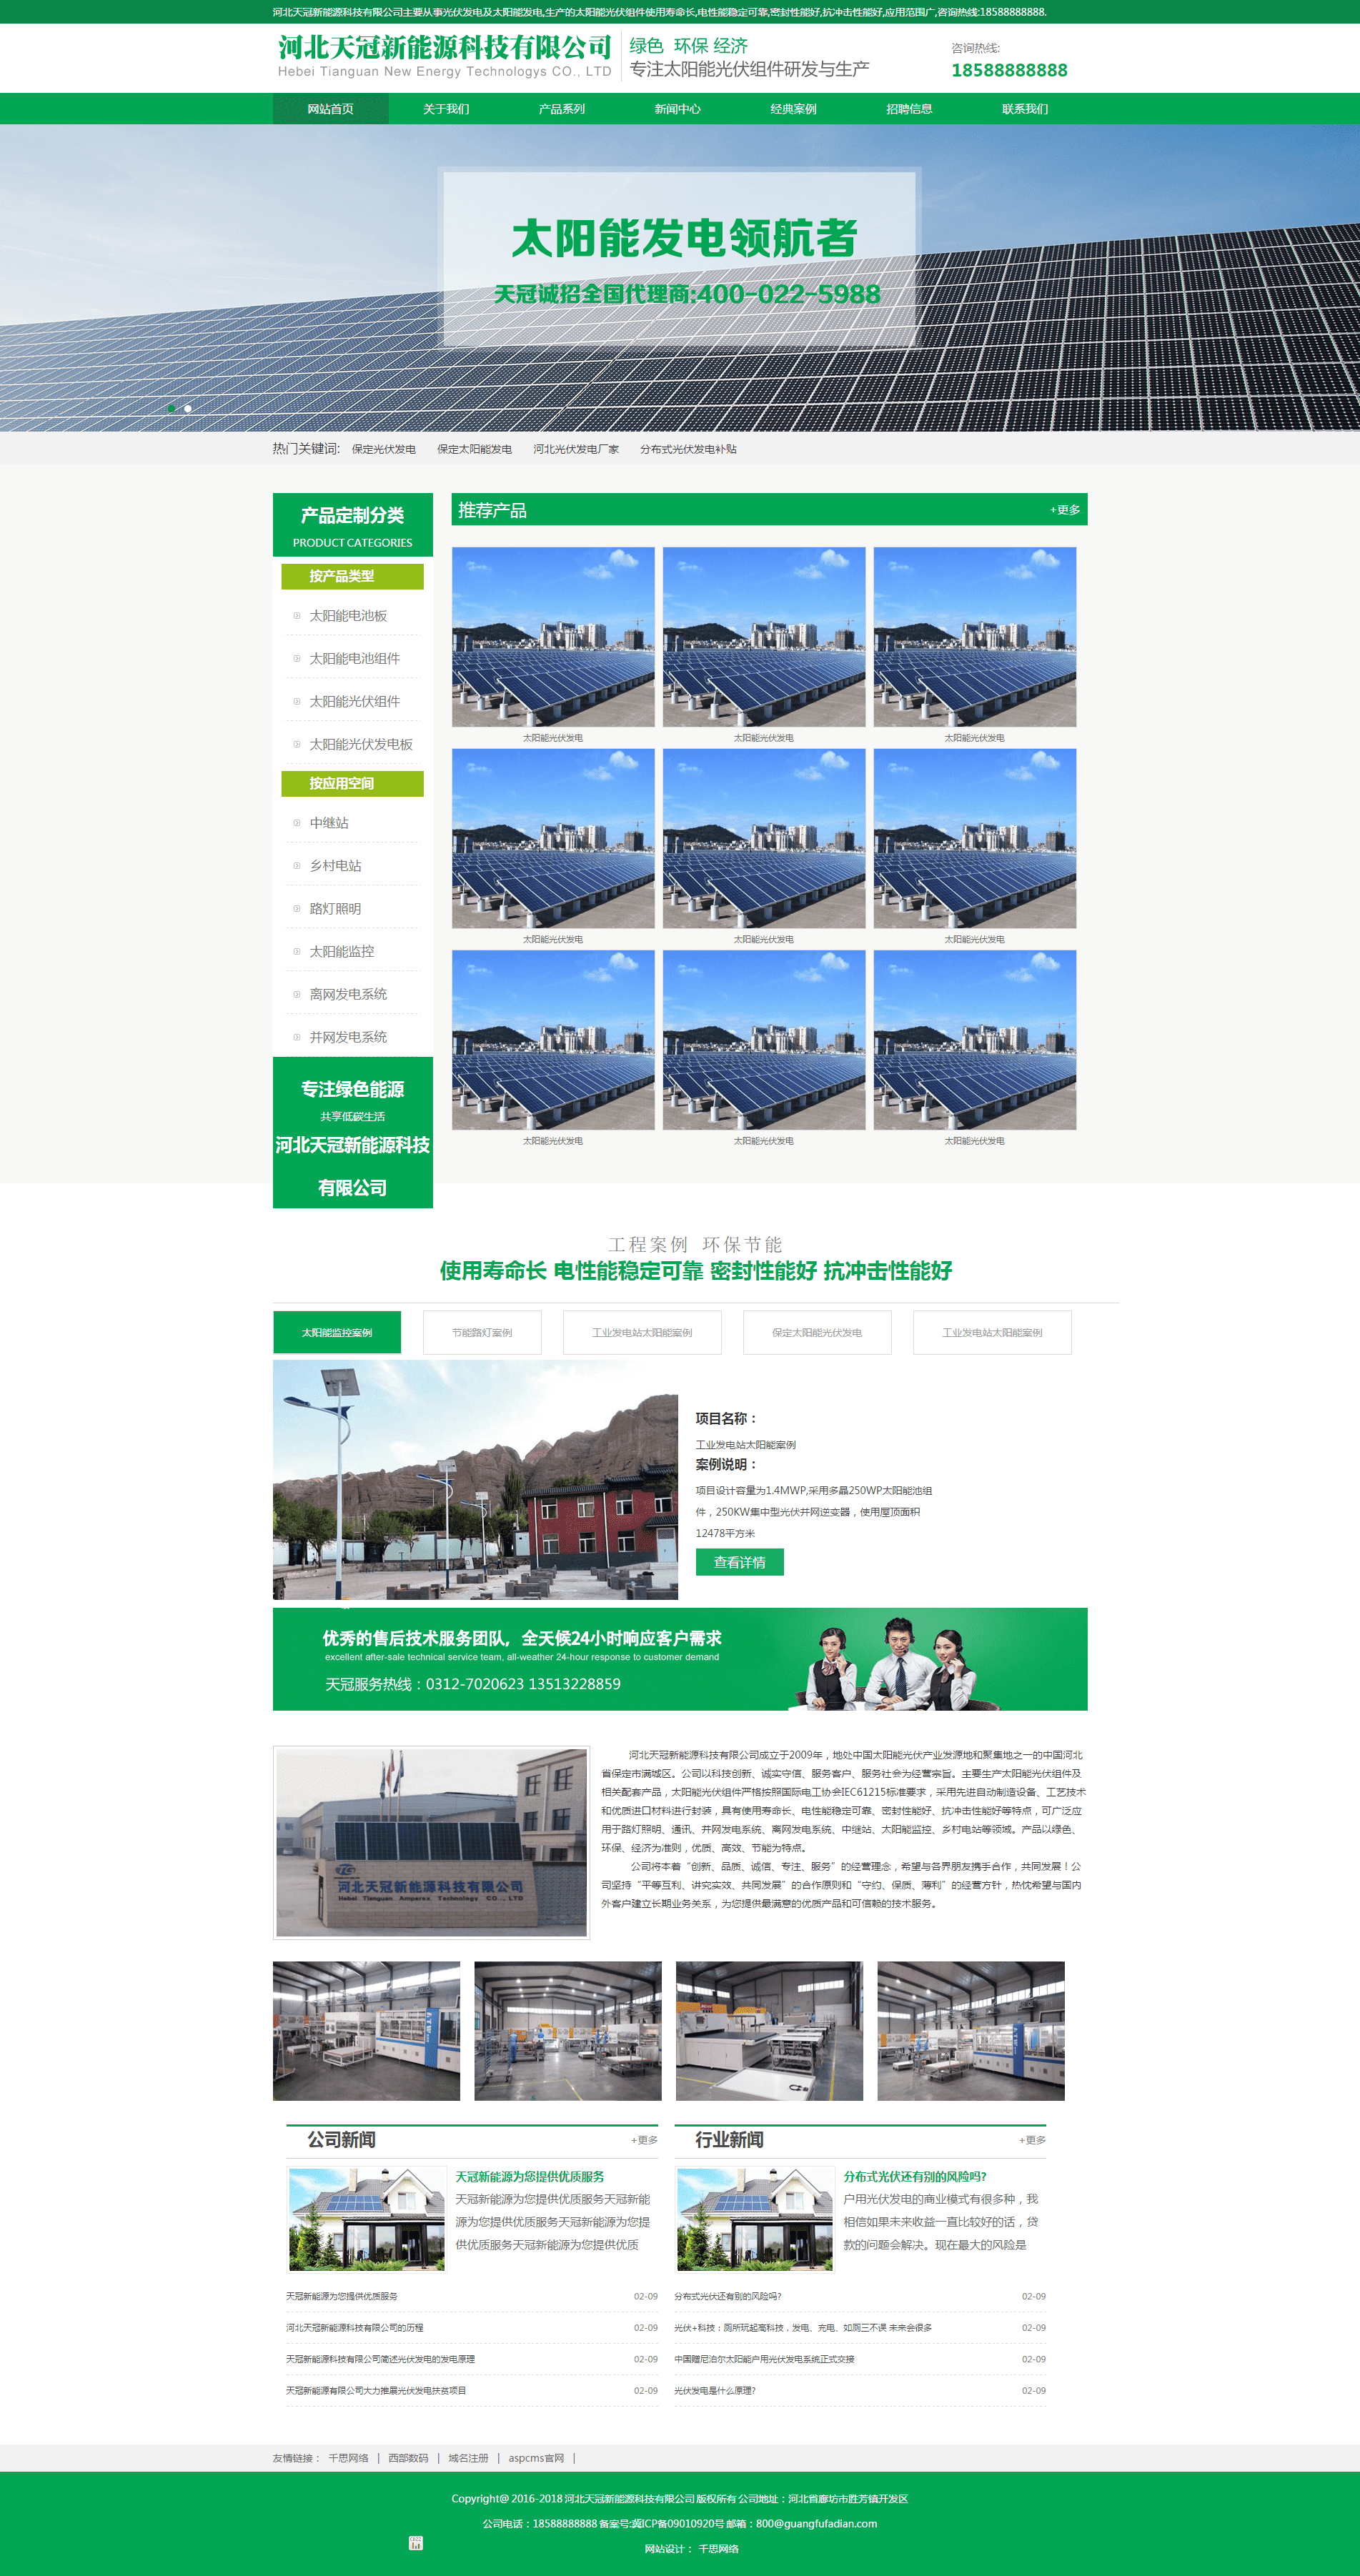 Aspcms绿色太阳能能源科技